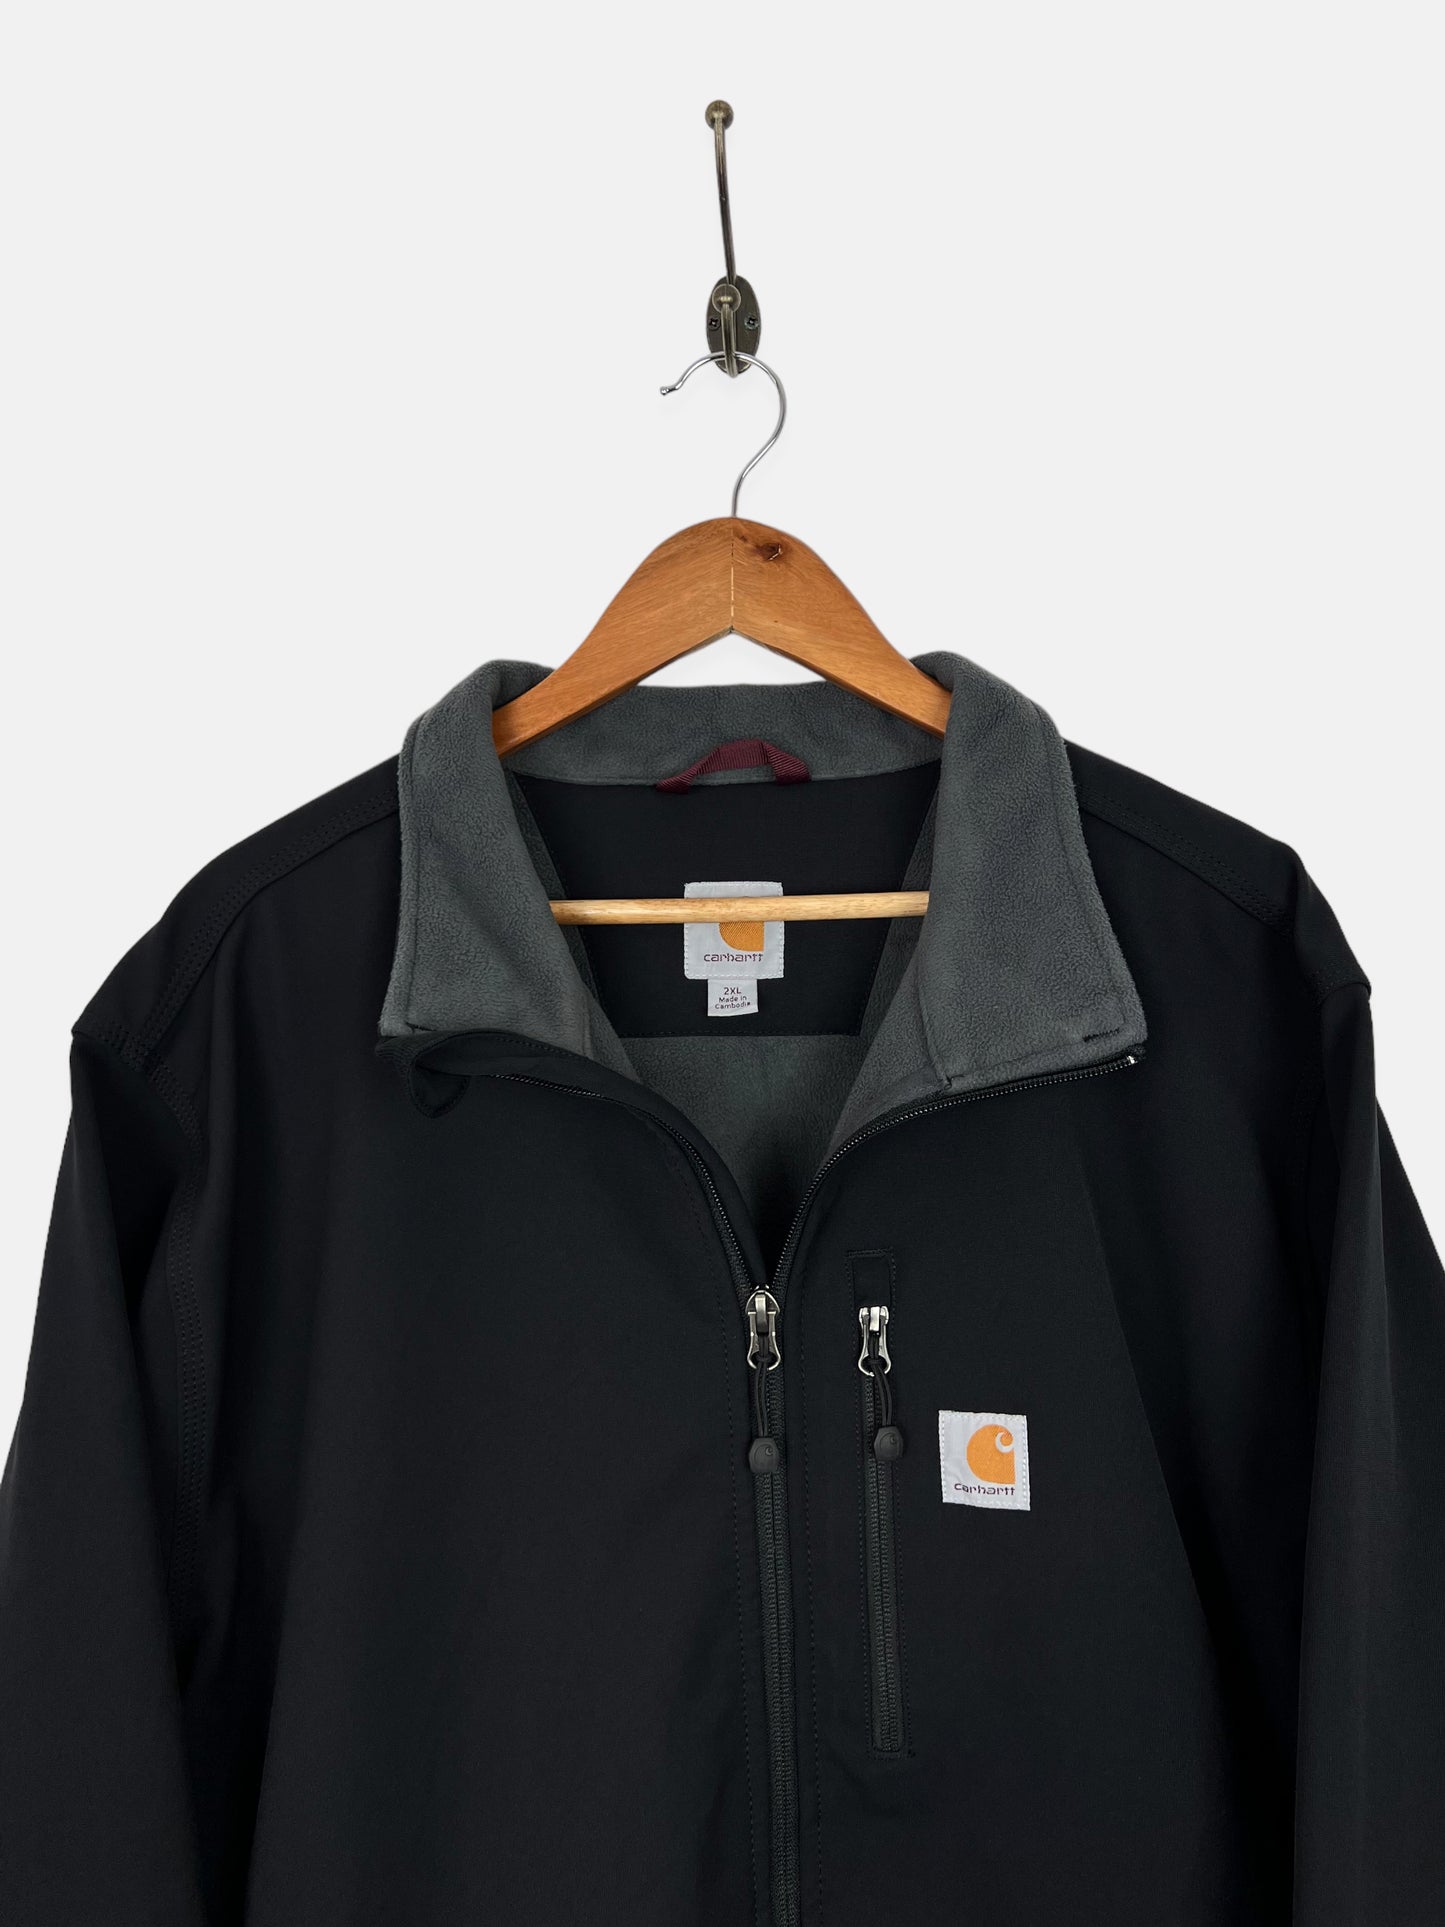 Carhartt Vintage fleece Lined Jacket Size 2XL